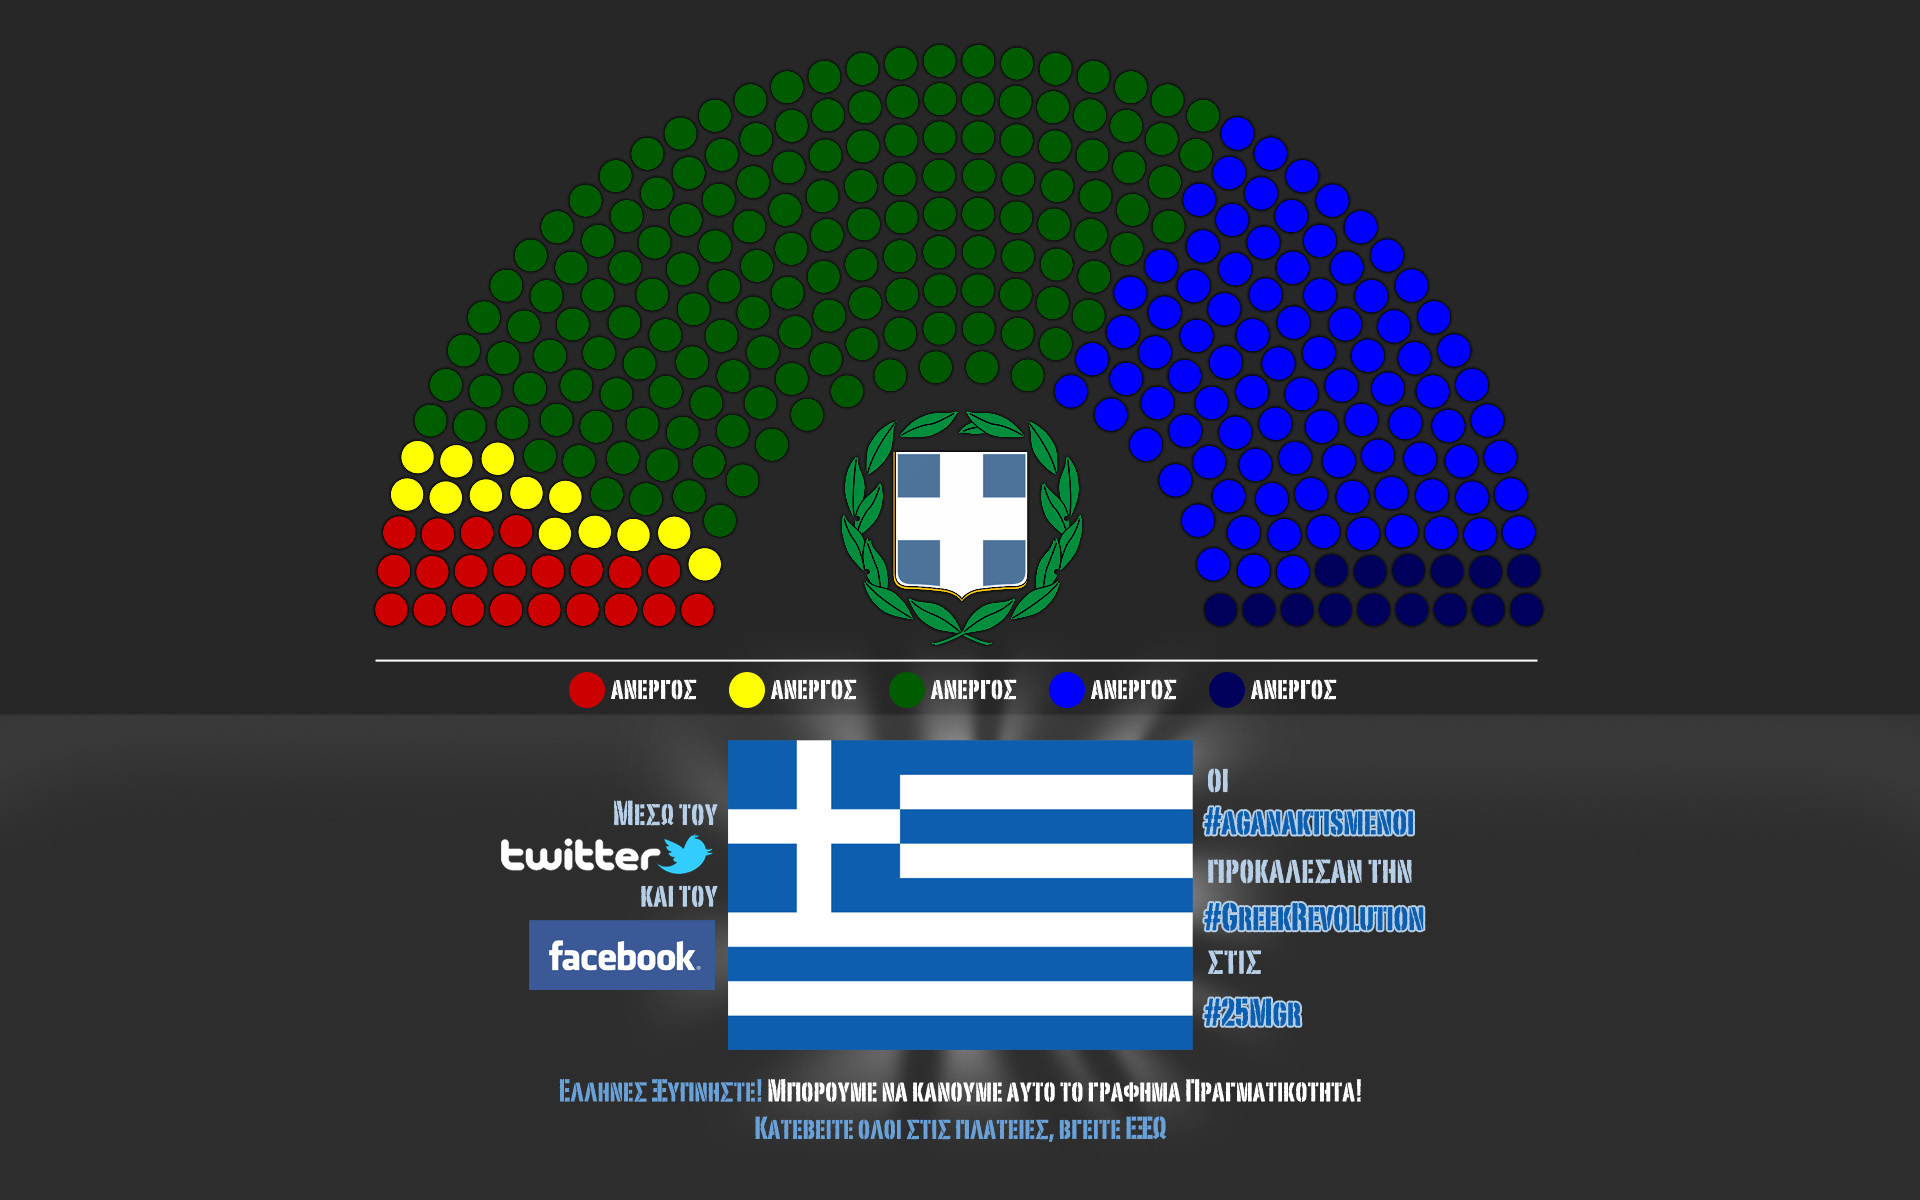 GreekRevolution 25-5-2011